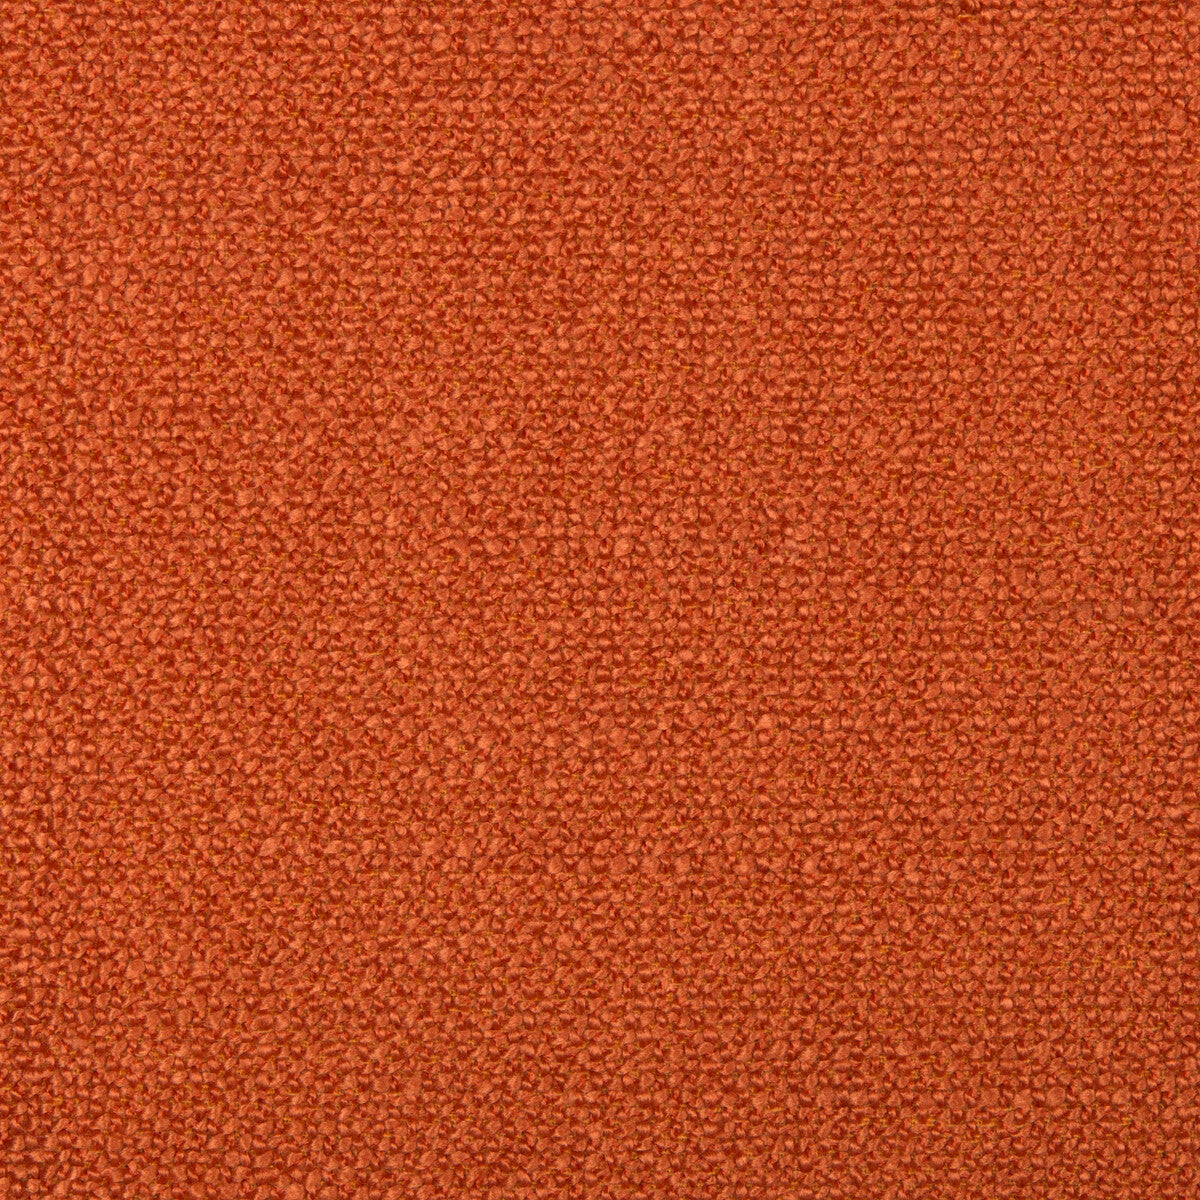 Kravet Smart fabric in 35379-12 color - pattern 35379.12.0 - by Kravet Smart in the Performance Kravetarmor collection